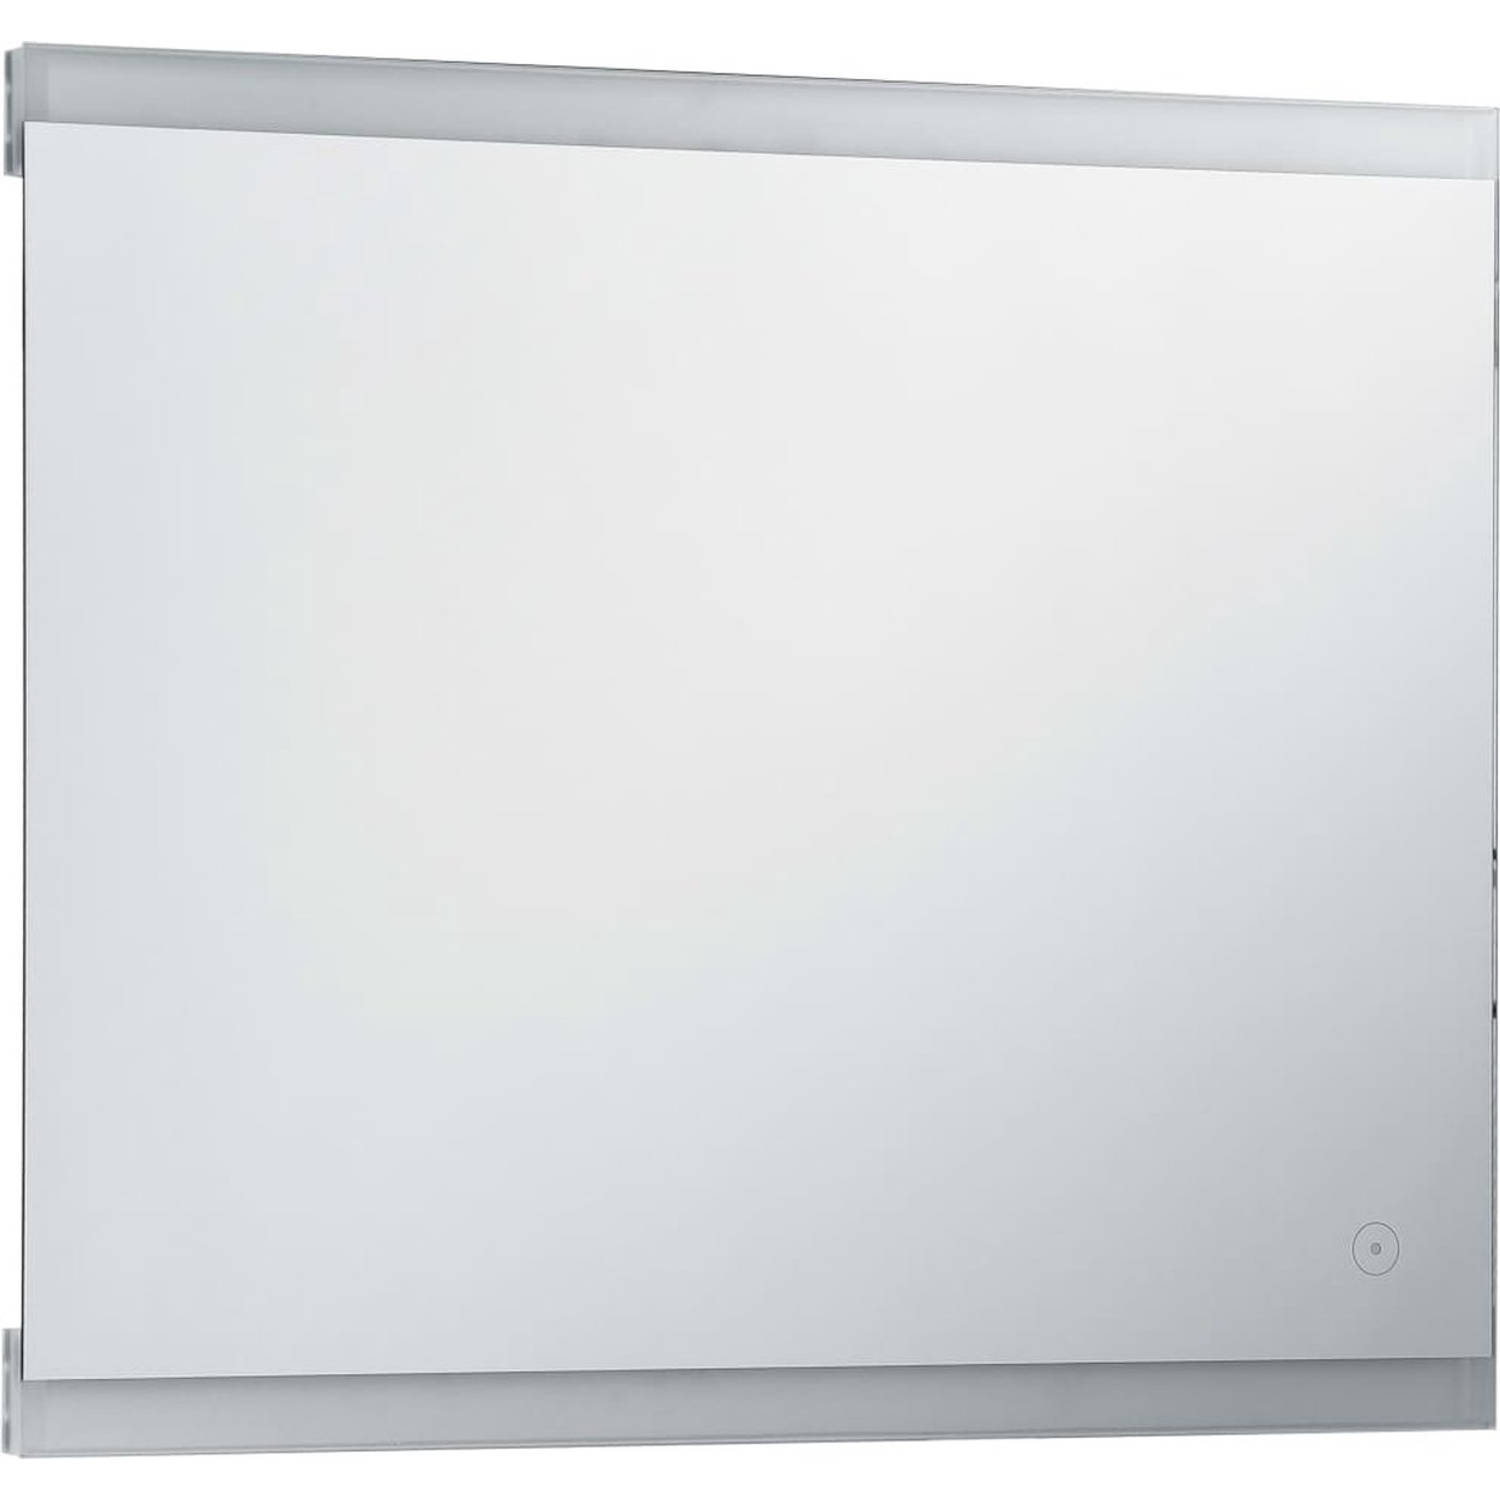 The Living Store LED-spiegel - 60 x 50 cm - 2 LED-lijnen - IP44 getest